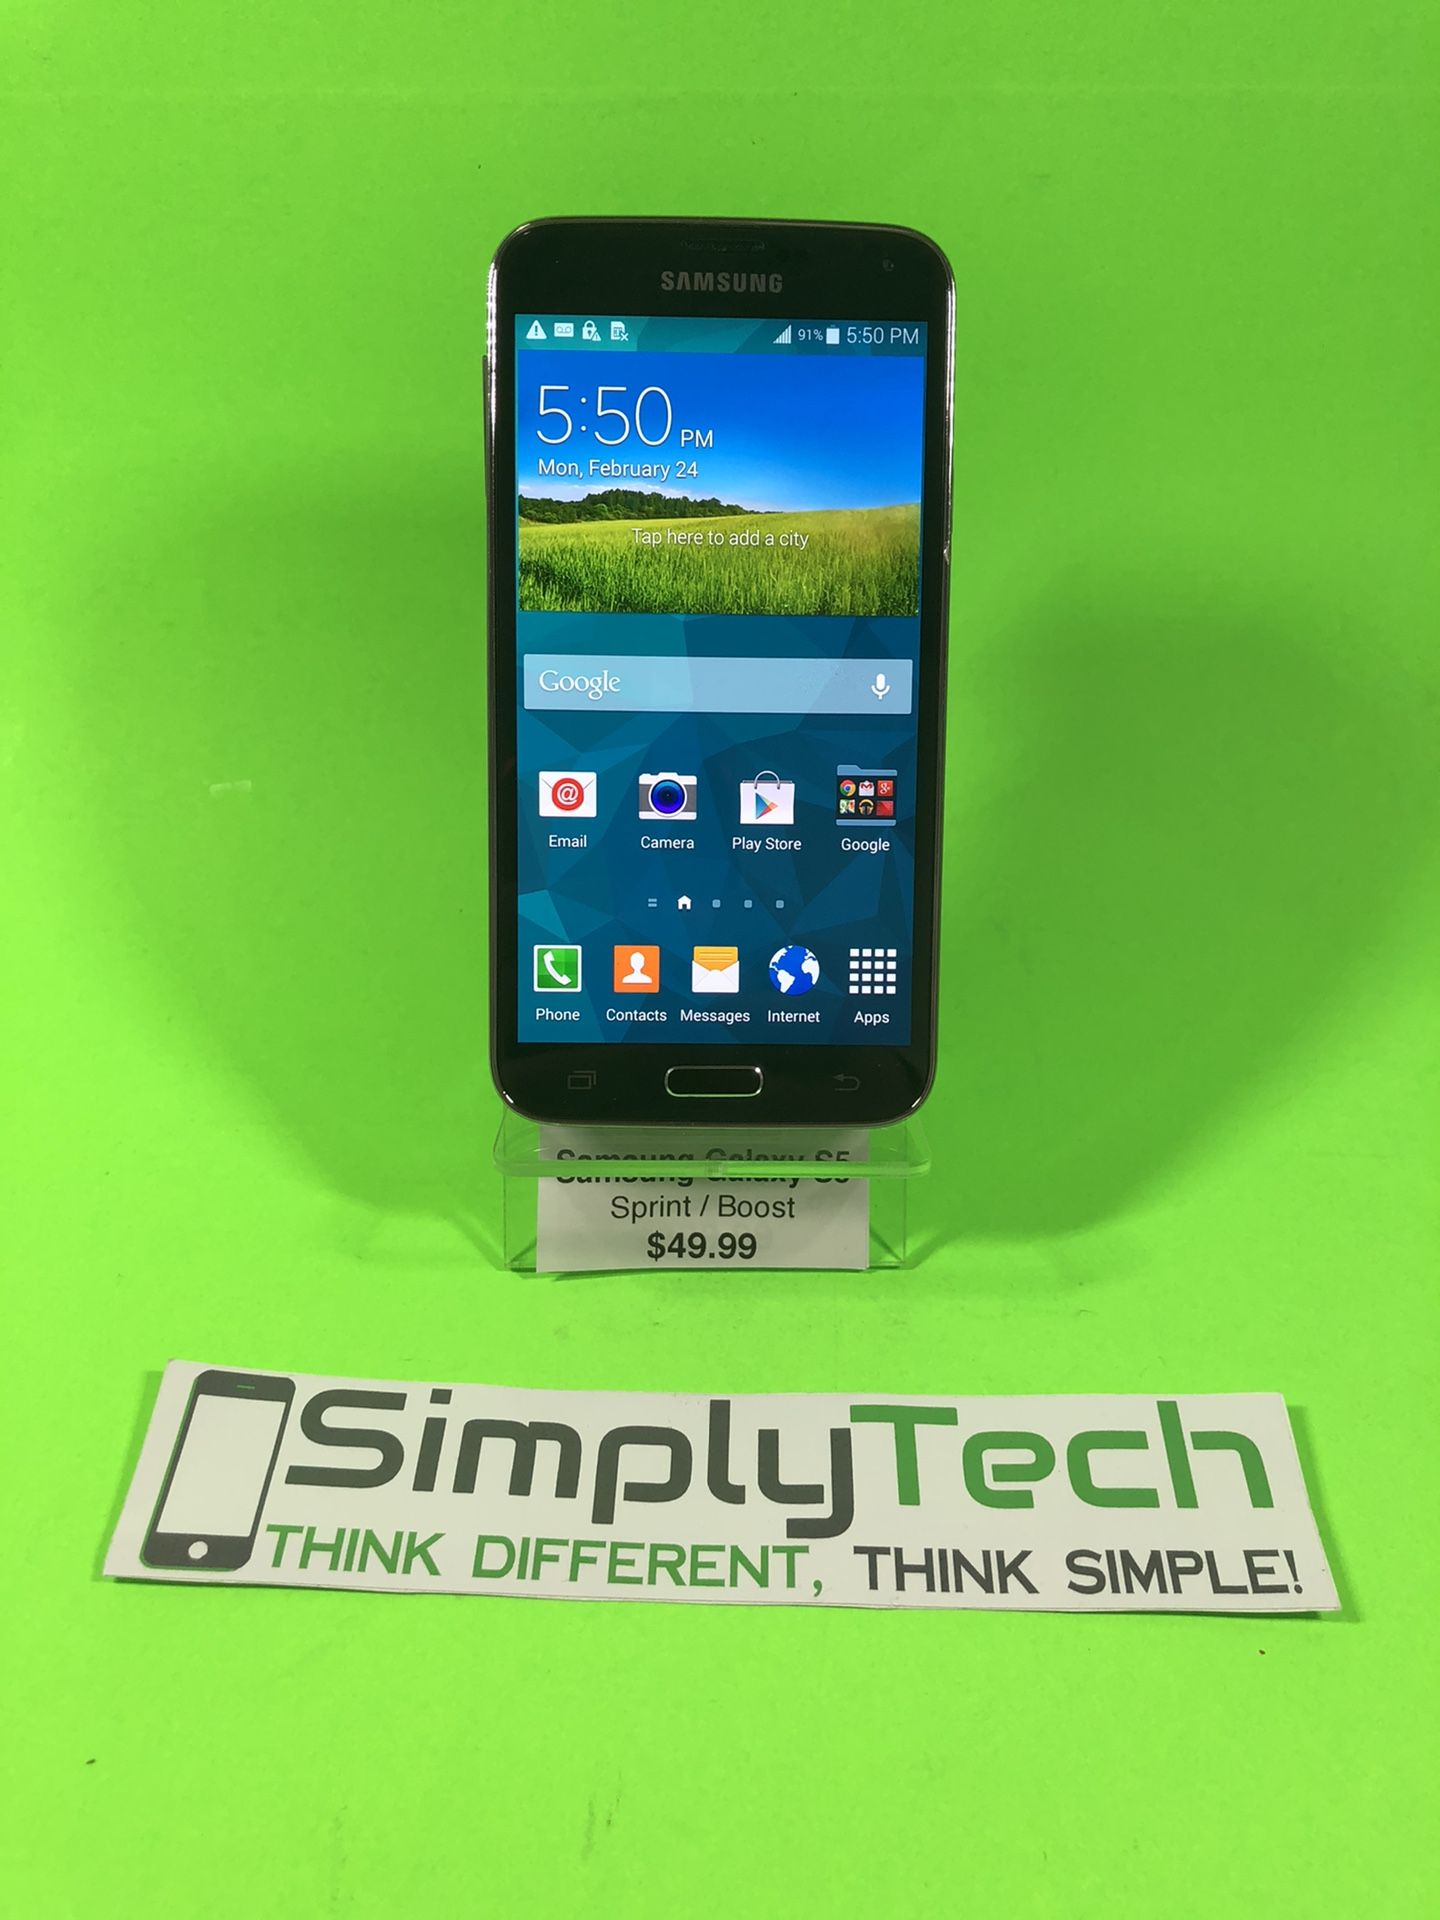 Samsung Galaxy S5 sprint / Boost